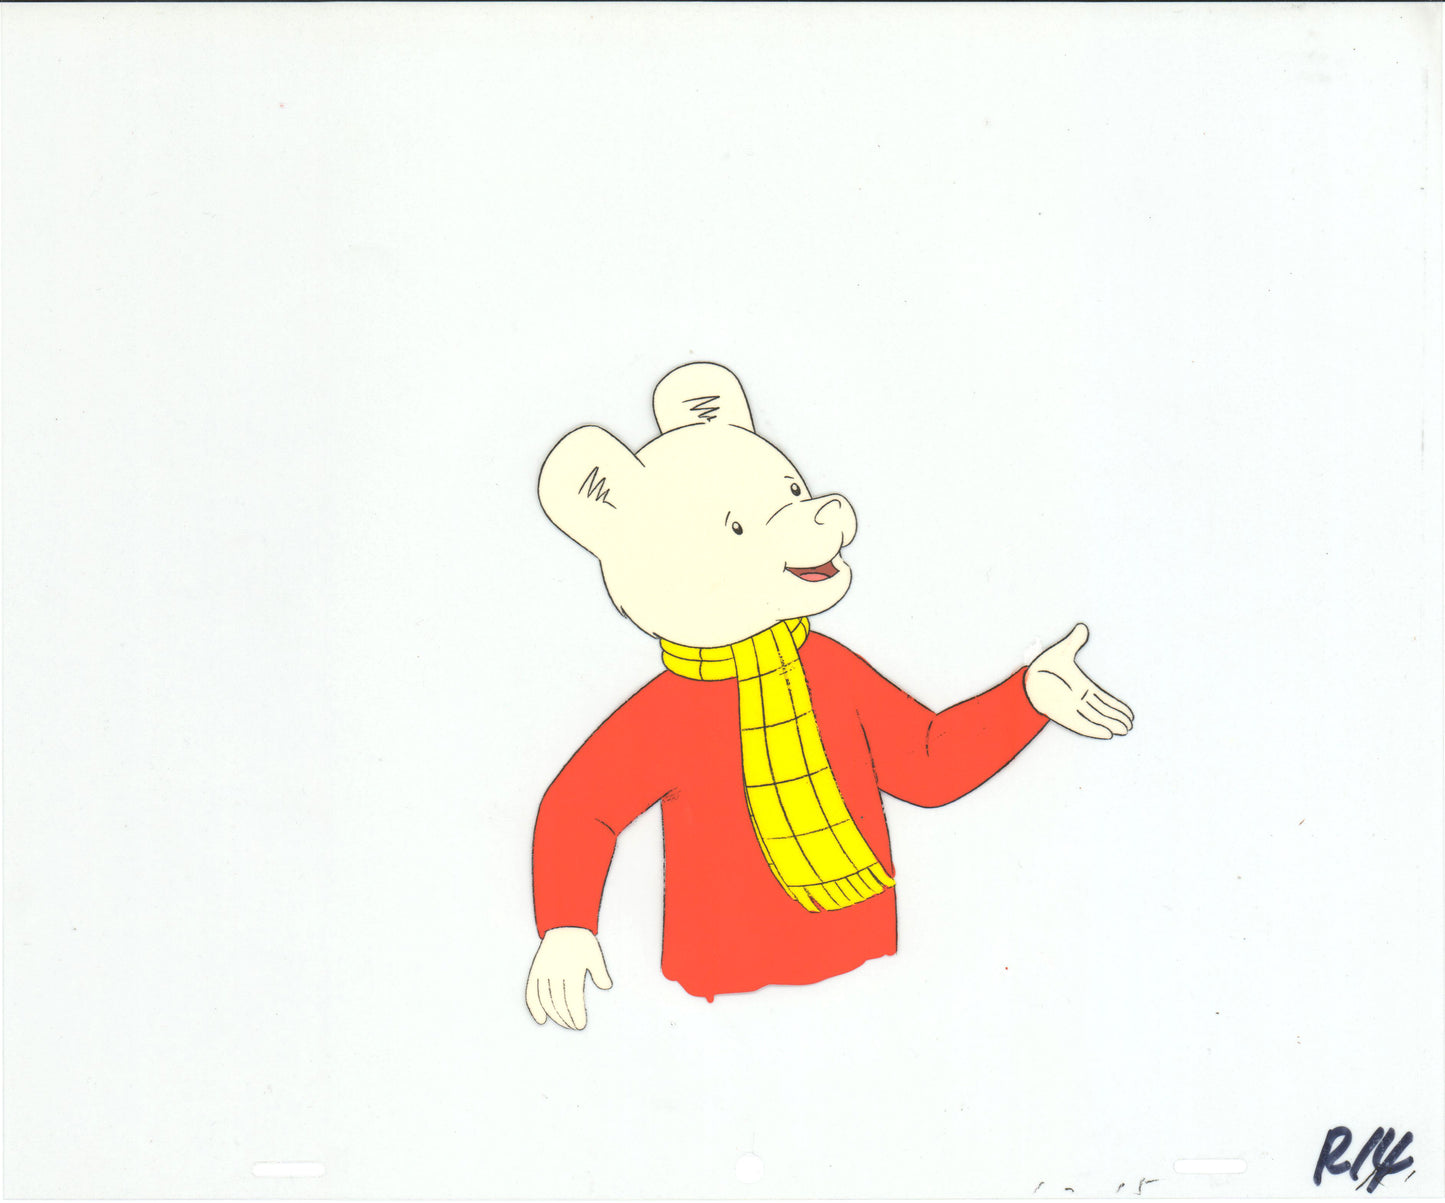 RUPERT Bear Original Production Animation Cel from the Cartoon by Nelvana Tourtel Animation 1990s 8-191